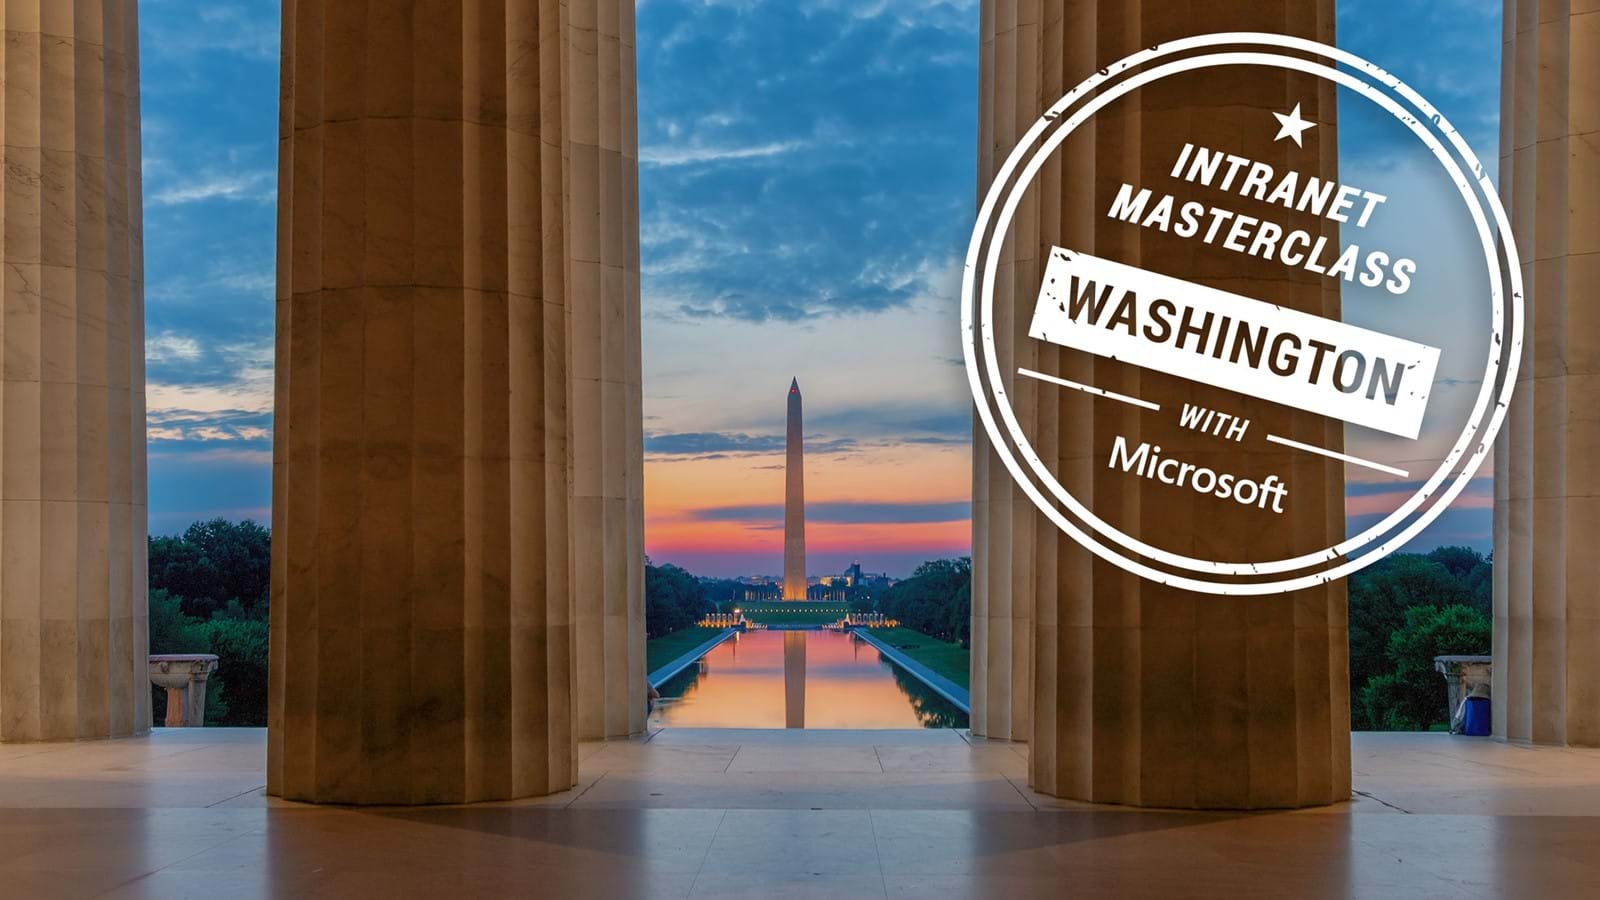 Unily's FREE Virtual Intranet Masterclass in Washington, D.C.